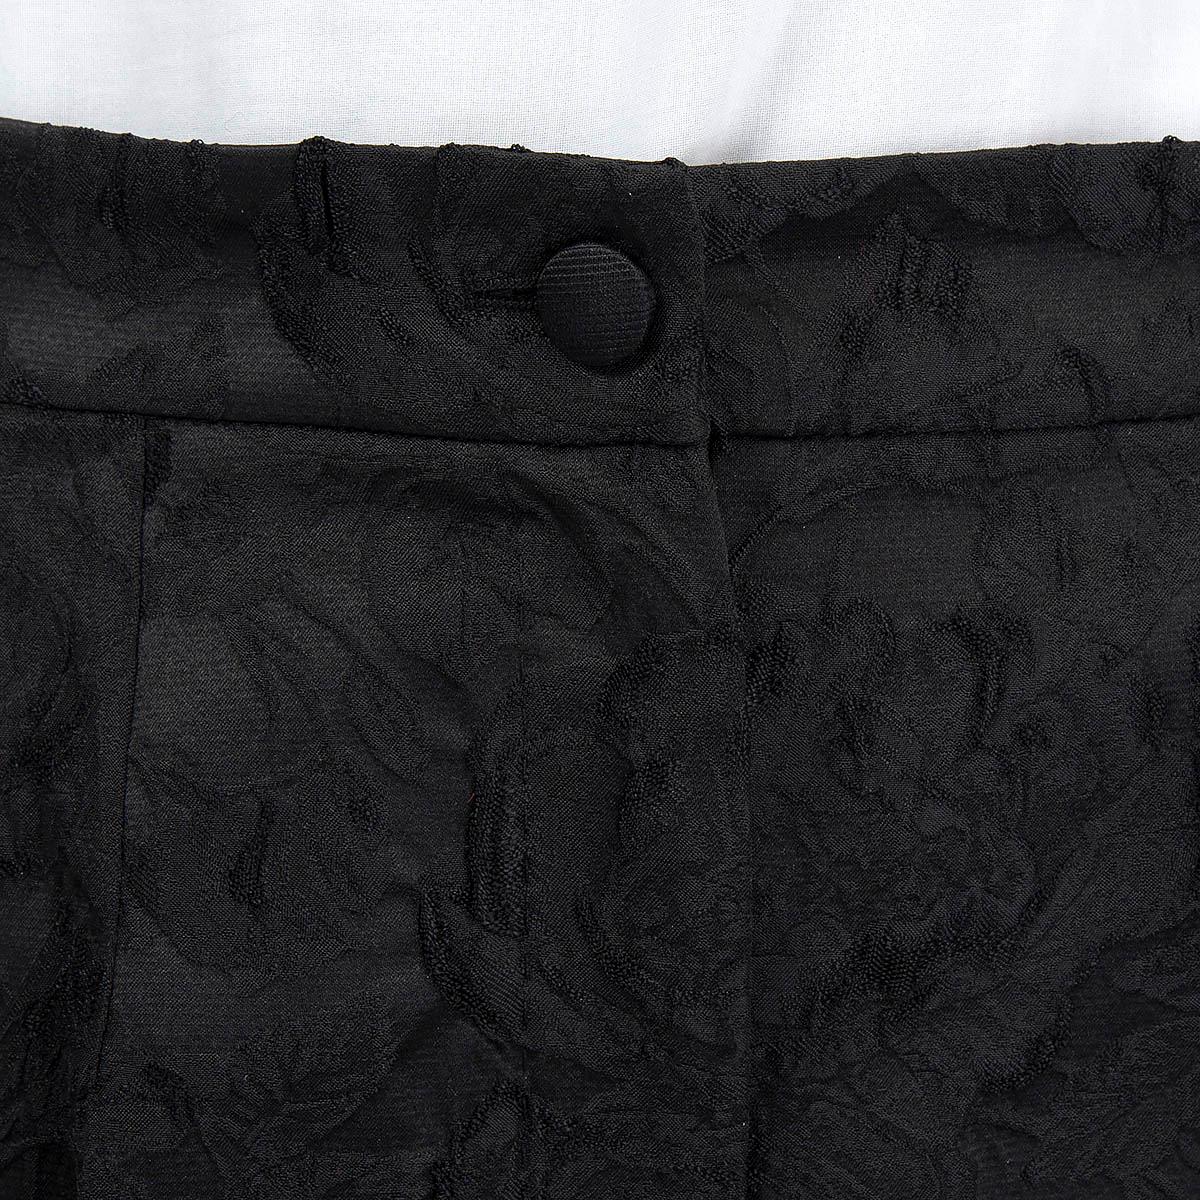 Black DOLCE & GABBANA black acetate JACQUARD Dress Pants 42 M